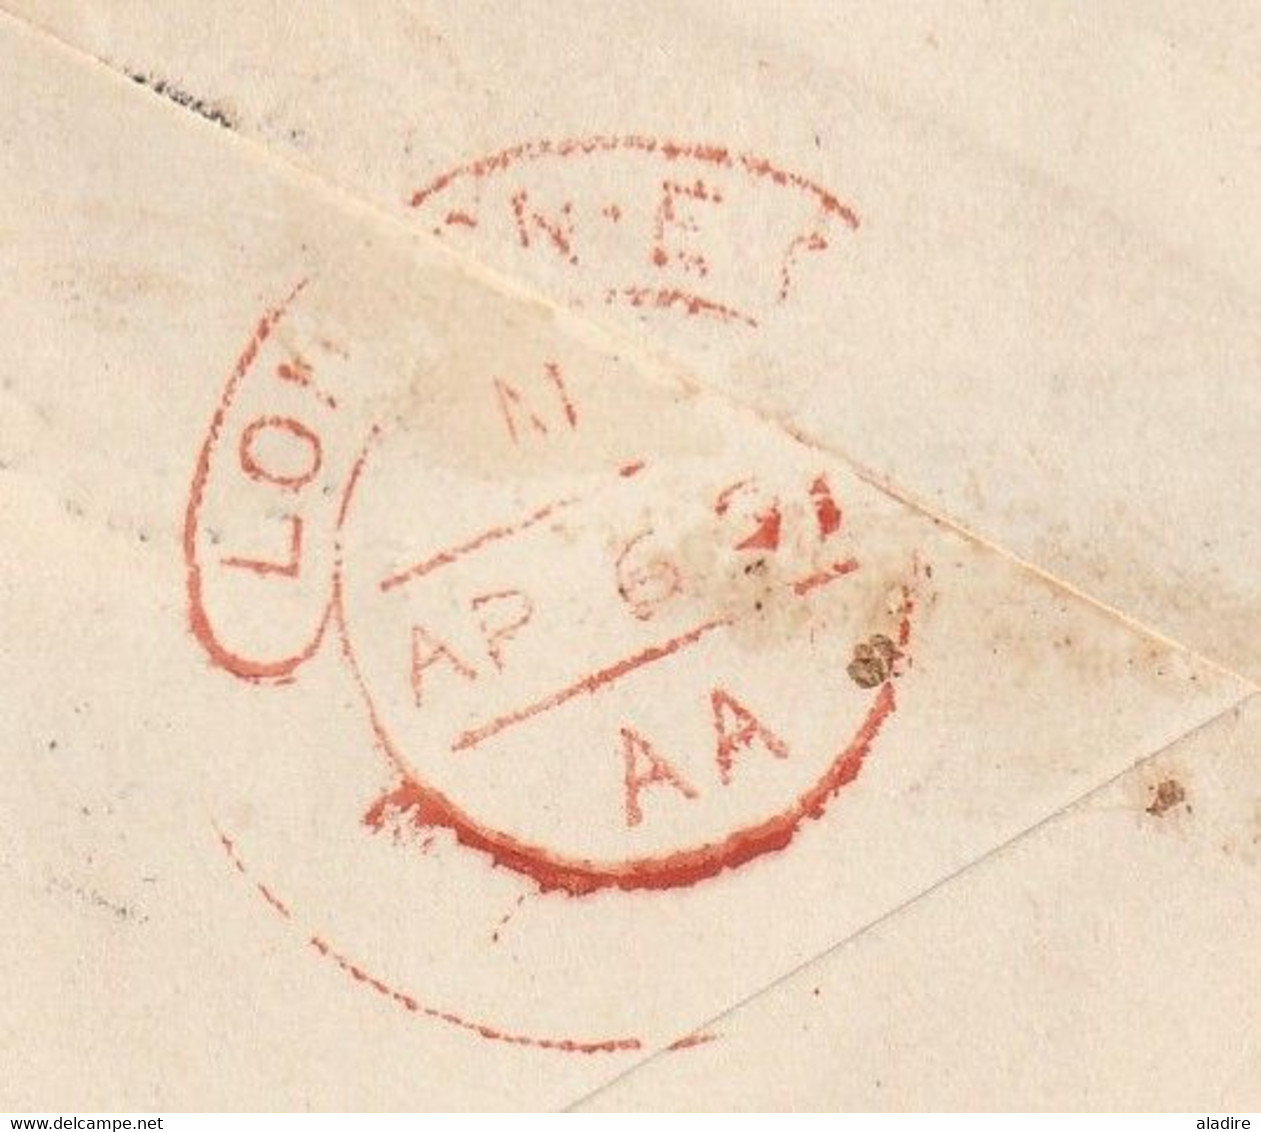 1891 - QV - Entier Postal Enveloppe 2 Annas 6 Pence De Bombay Mumbai, Inde, GB Vers London, GB - 1882-1901 Imperium